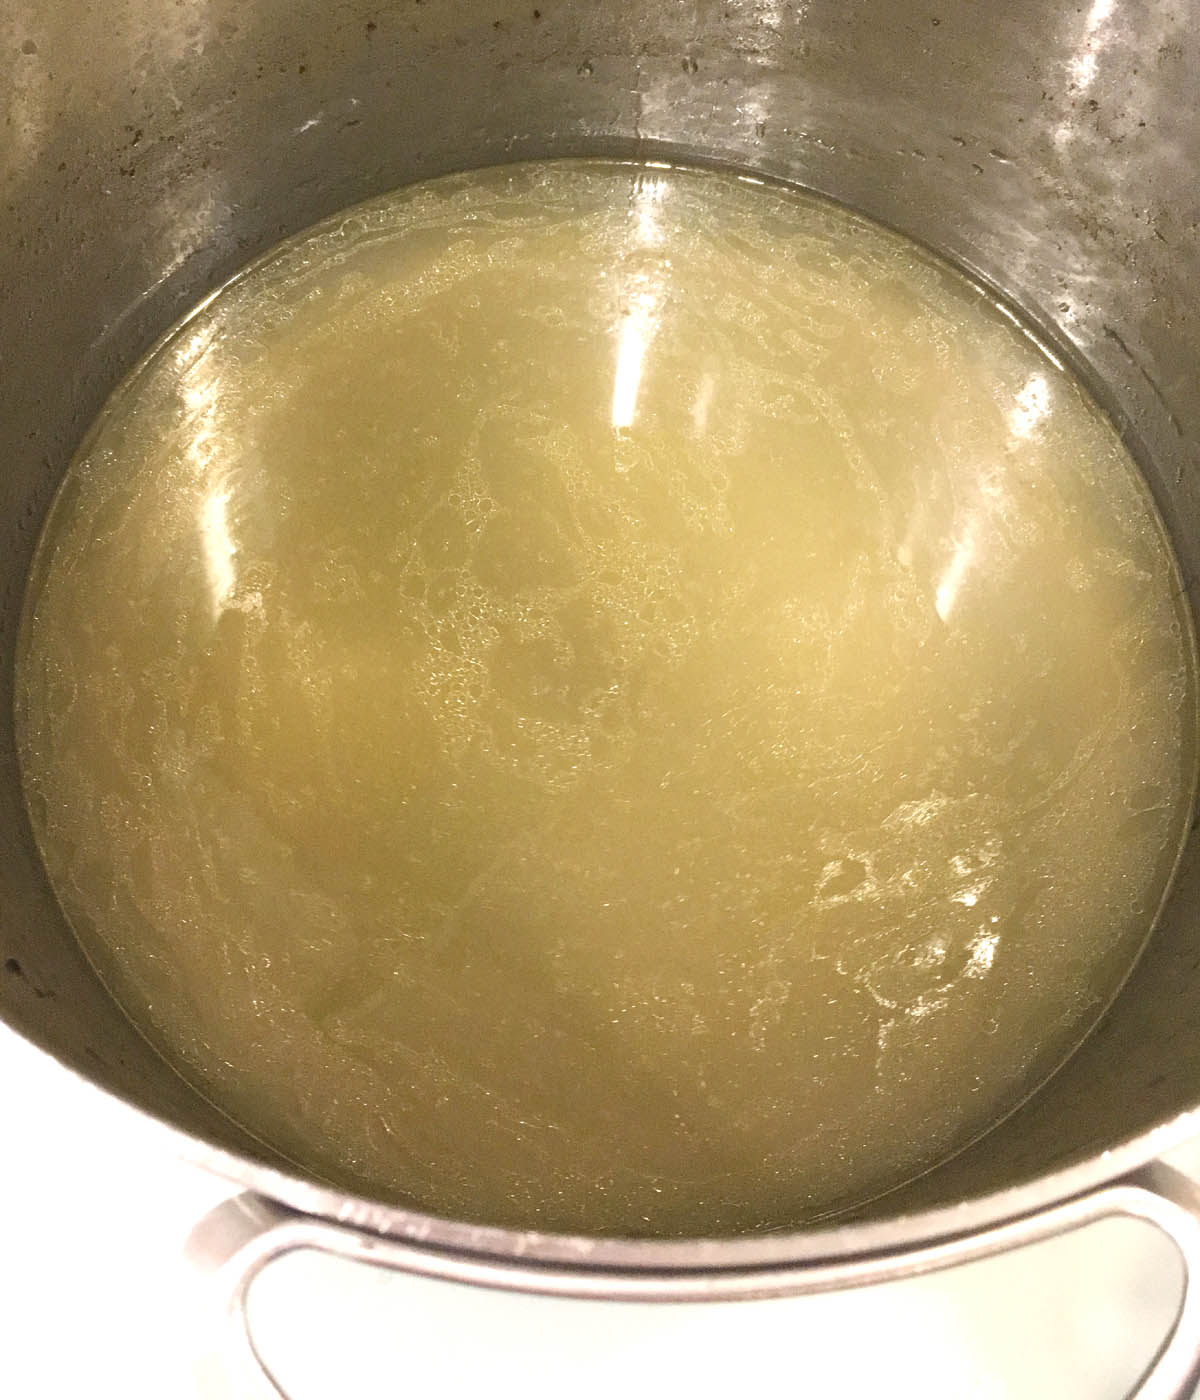 A metal pot containing yellow soup.